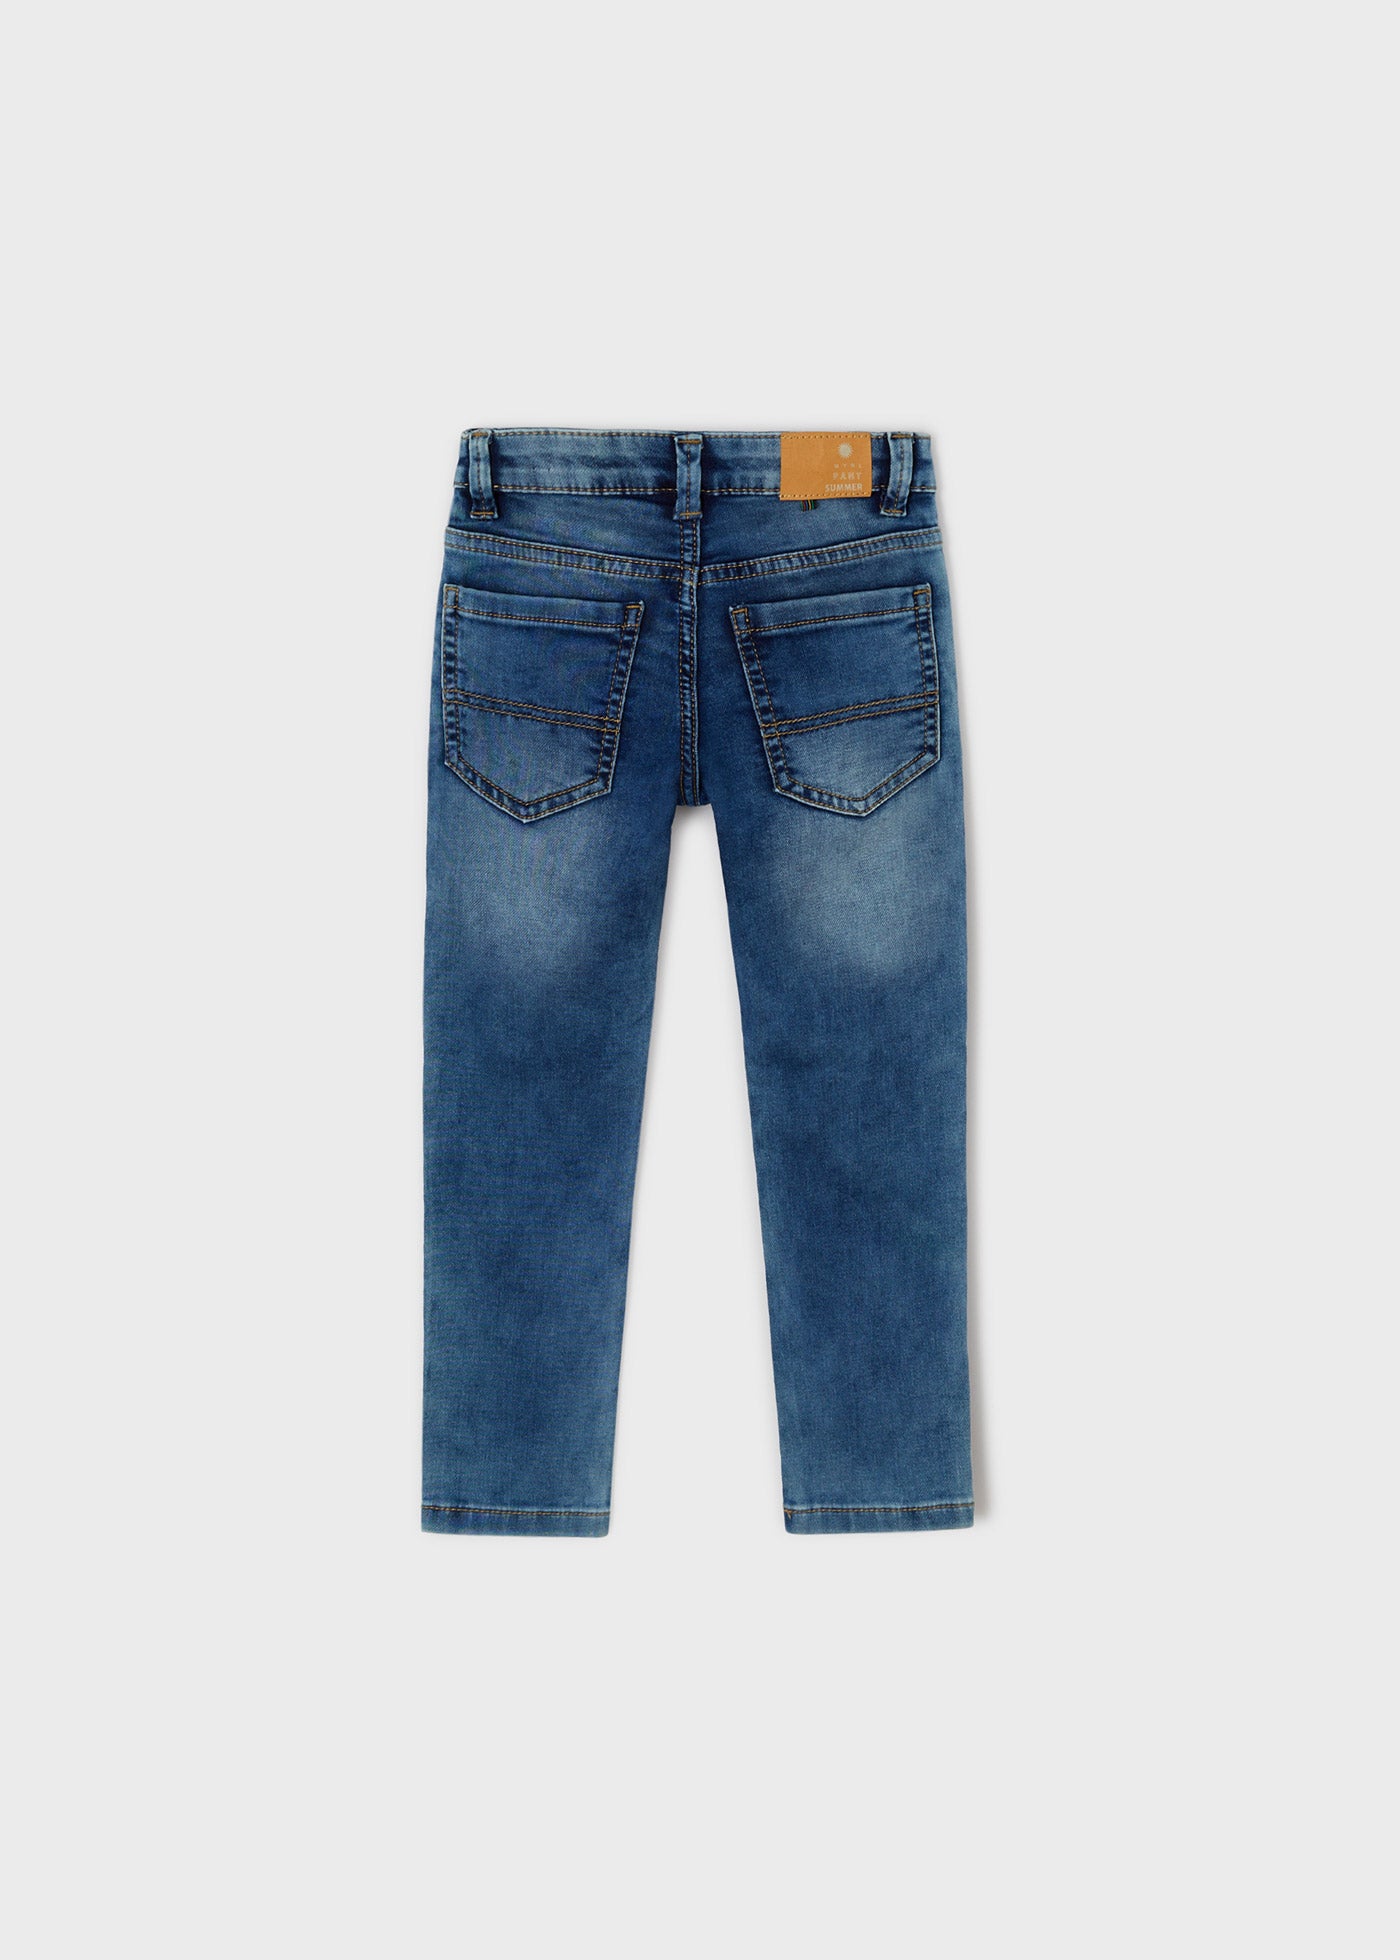 Mayoral Mini Soft Jeans_ Medium Blue 3578-94